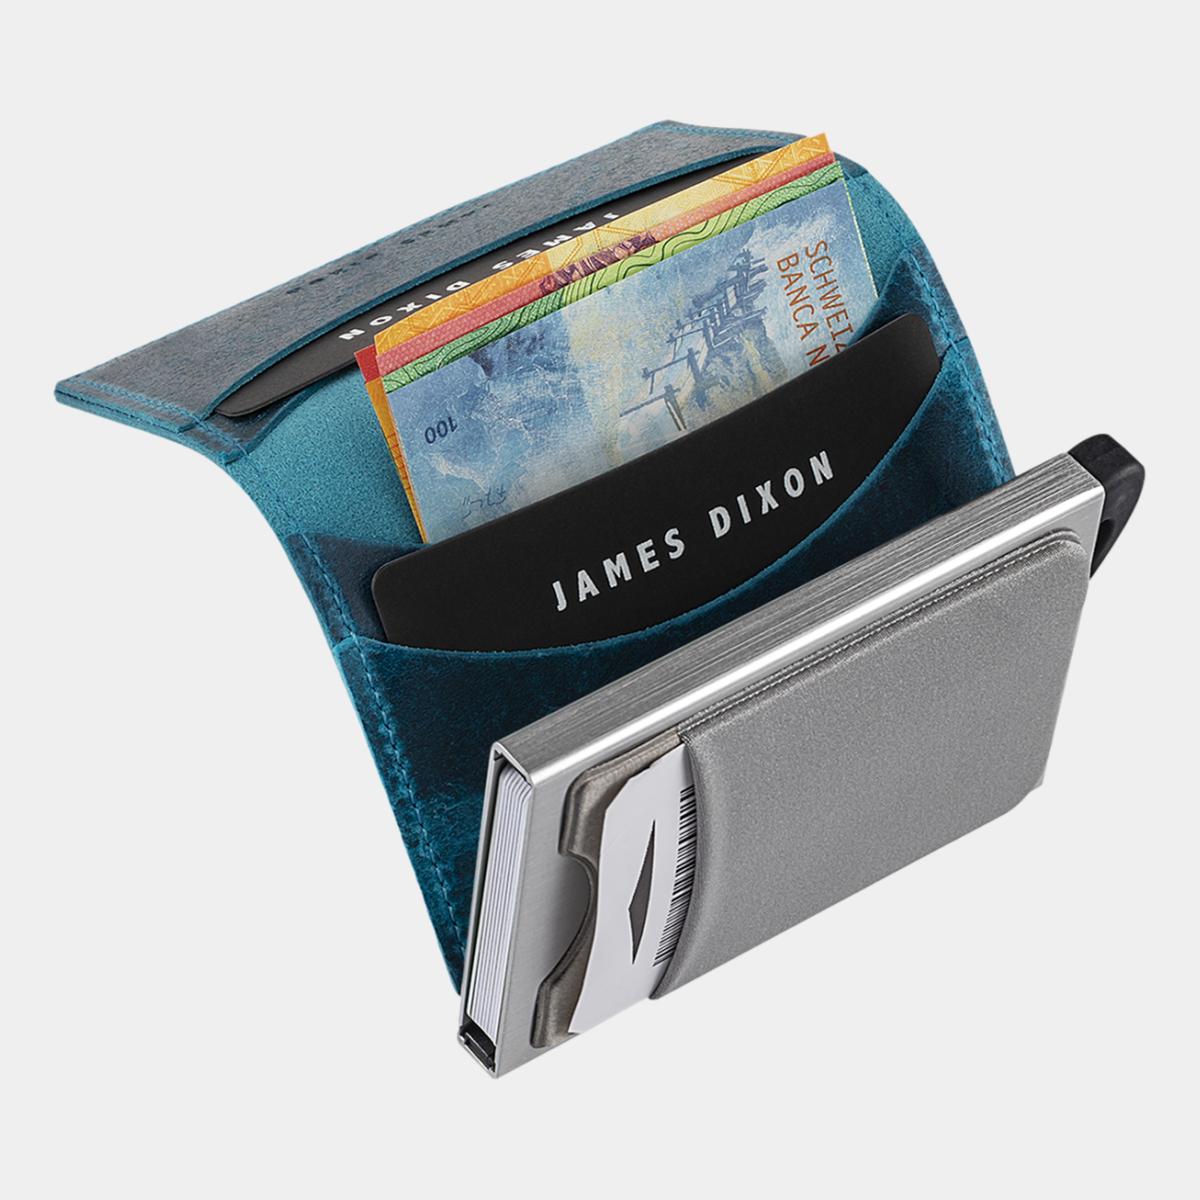 jd0070 james dixon extra cards grey pocket on puro raw wallet notes